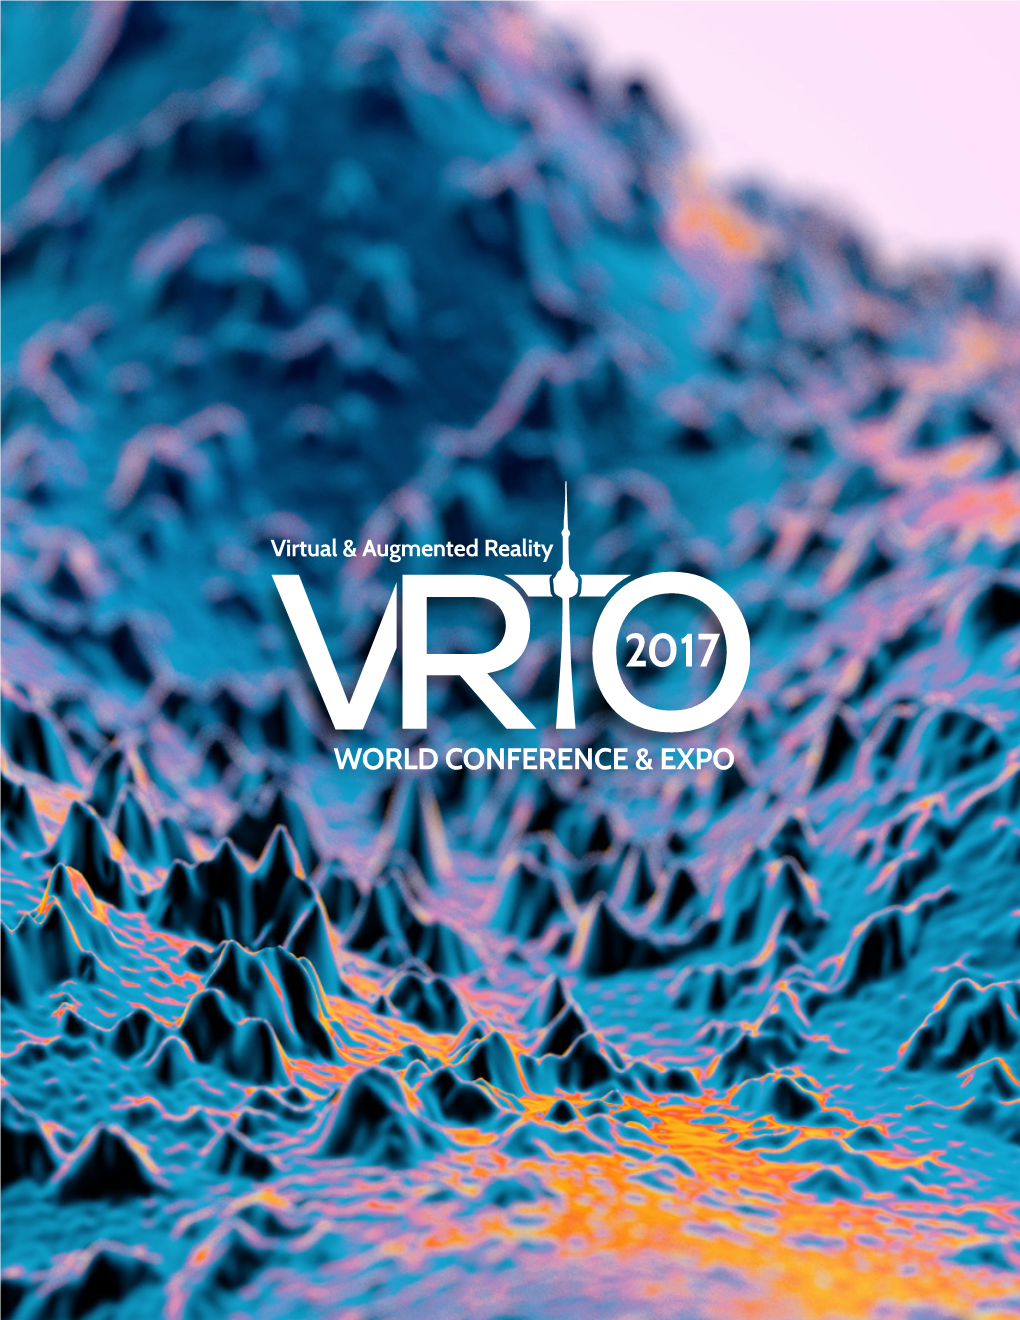 VRTO Conference & Expo 2017 Programme